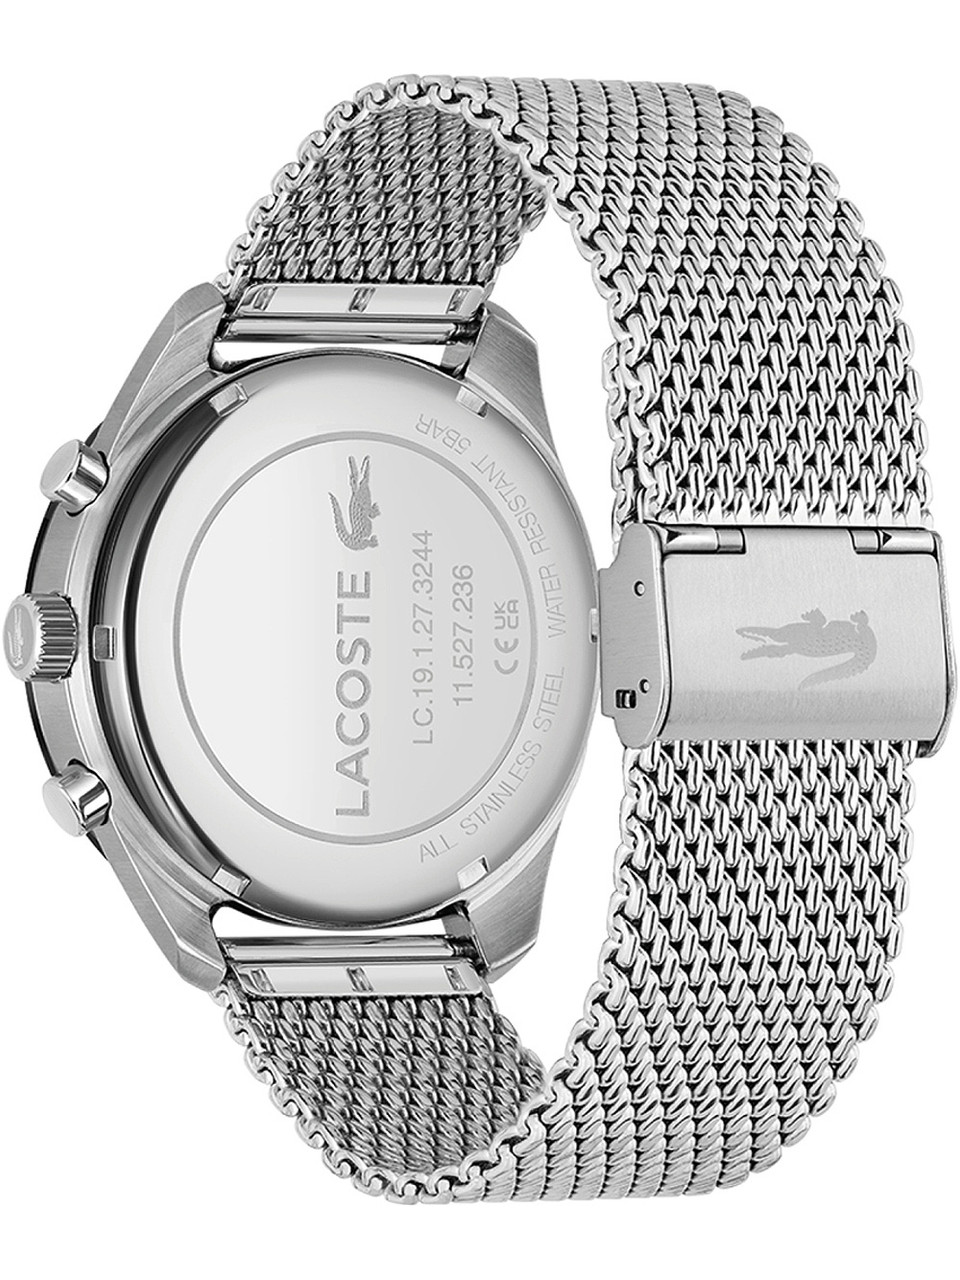 Lacoste 2011163 Boston chronograph 42mm 5ATM - owlica | Genuine Watches